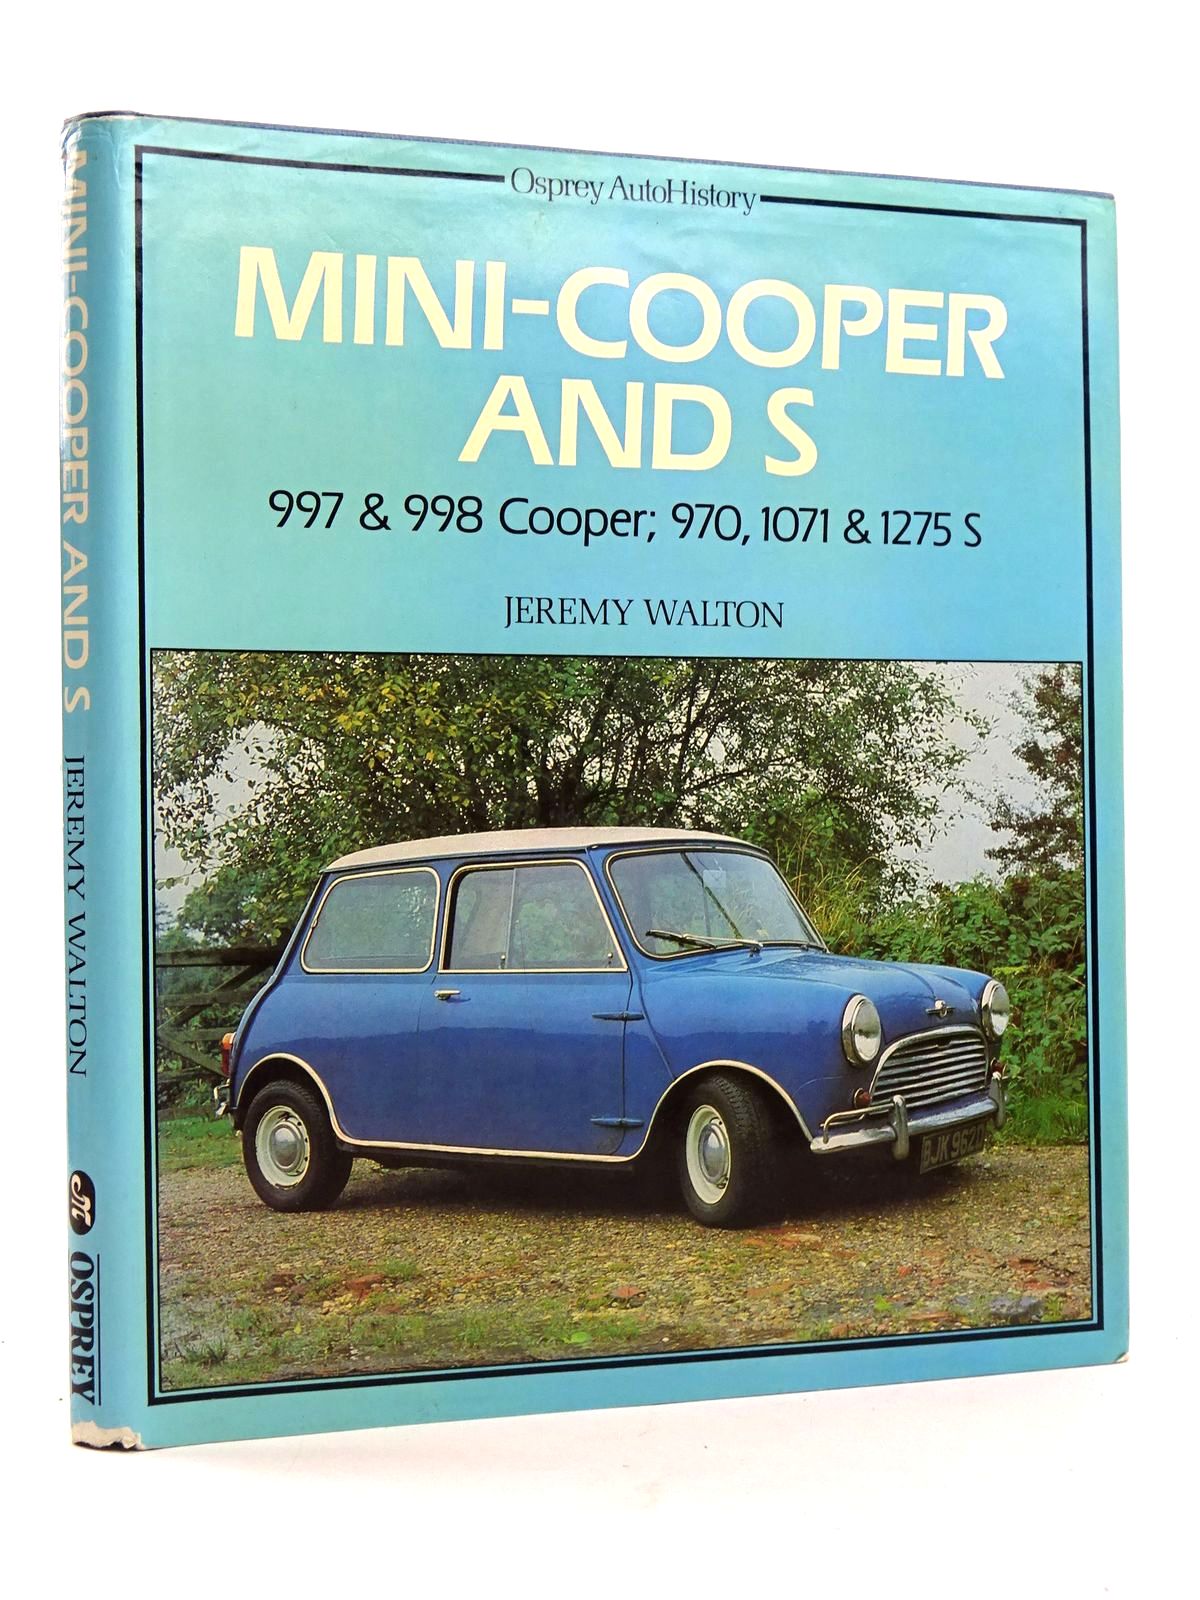 Mini-cooper And S (osprey Auto History)